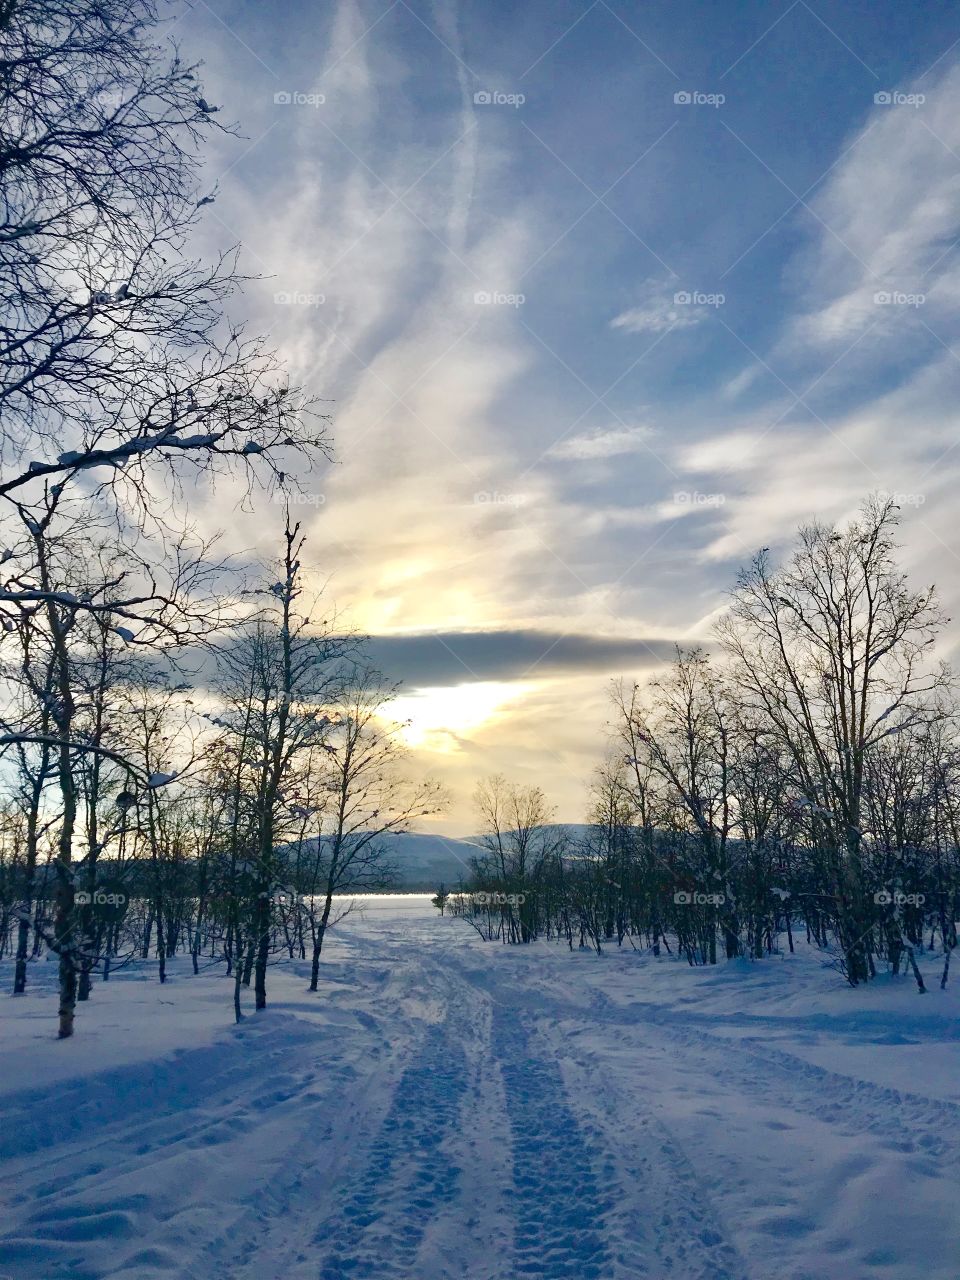 Winterday in march 2018, puoltsa, kiruna sweden